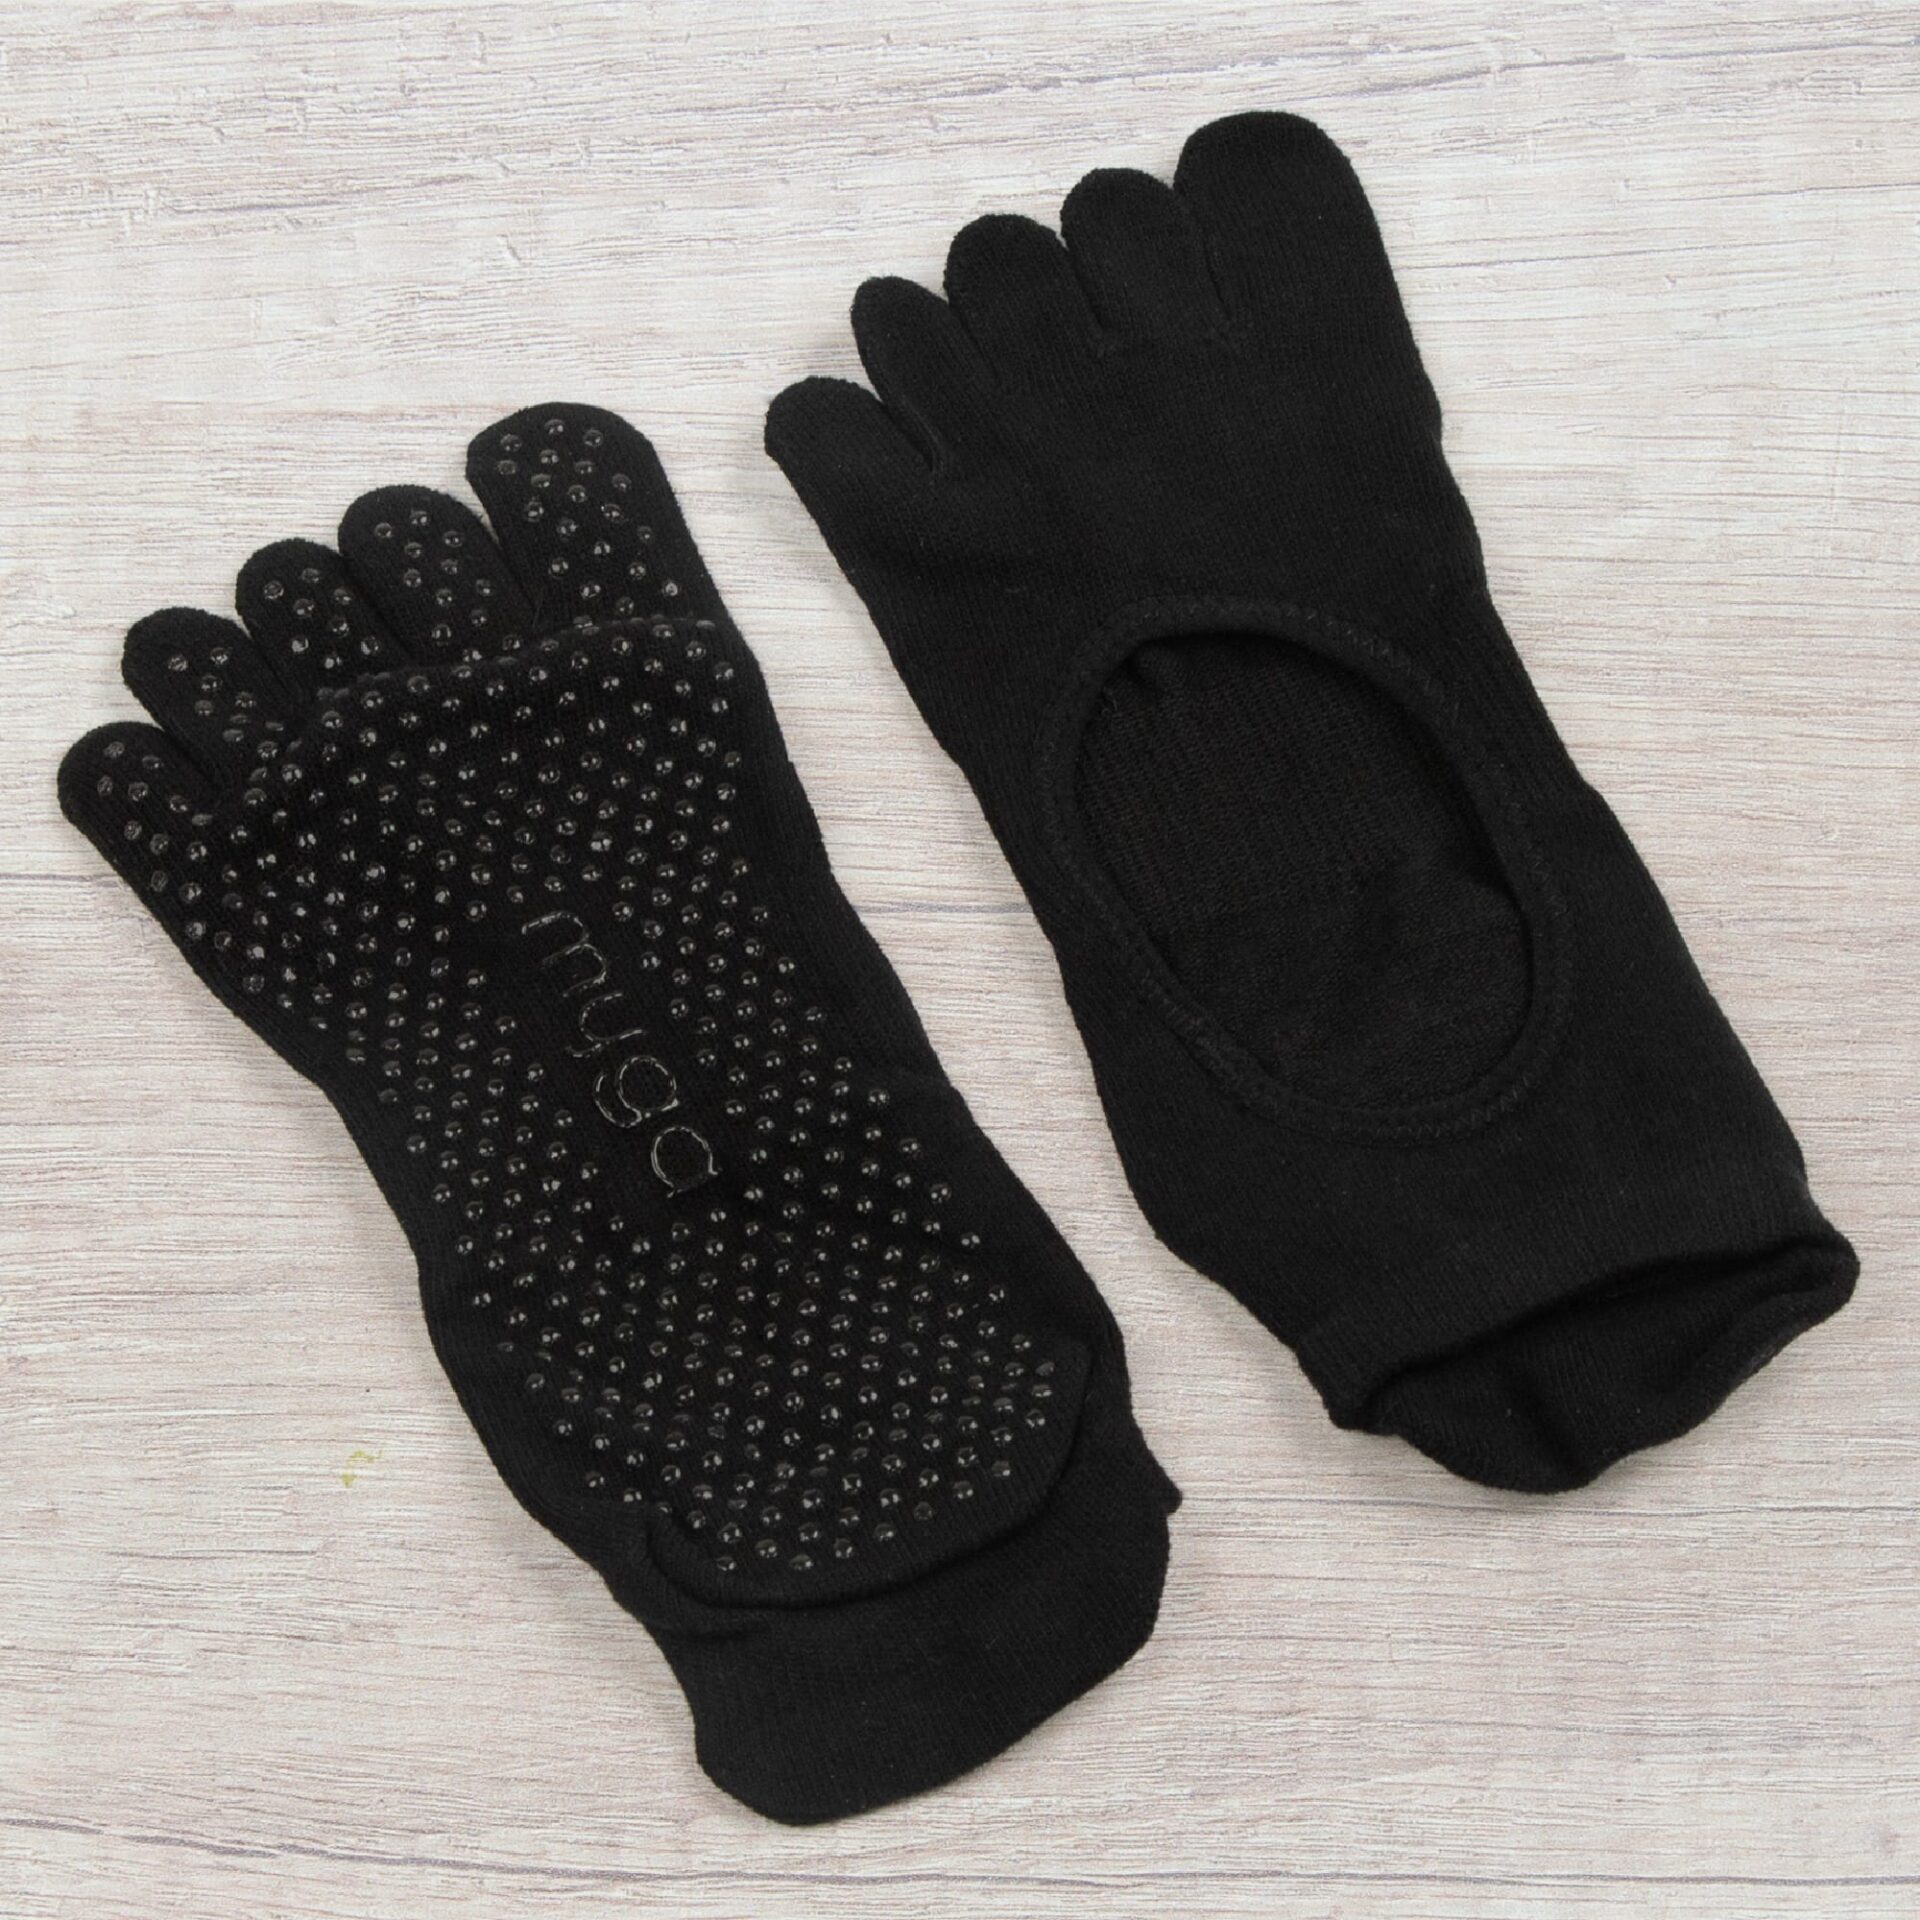 Myga, Maximise Grip Ideal For Yoga or Pilates. Gripped Toe socks